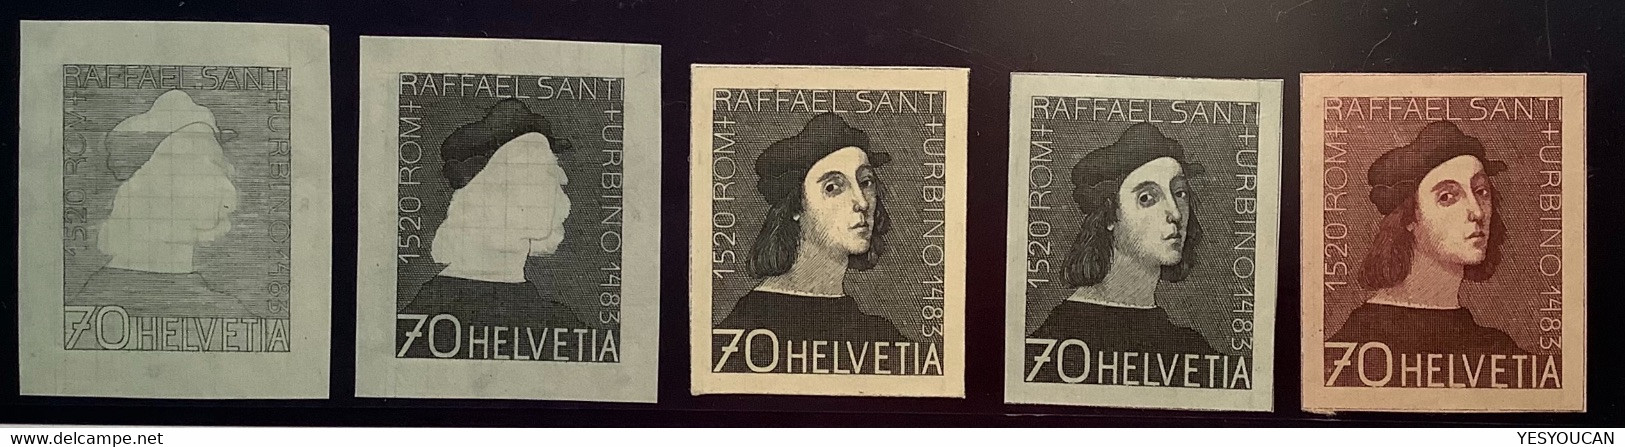 Schweiz1946 BICKEL ESSAY "RAFFAEL SANTI"1483-1520 Raphael Italian Renaissance Painter&architect(Art Vatican Architecture - Neufs